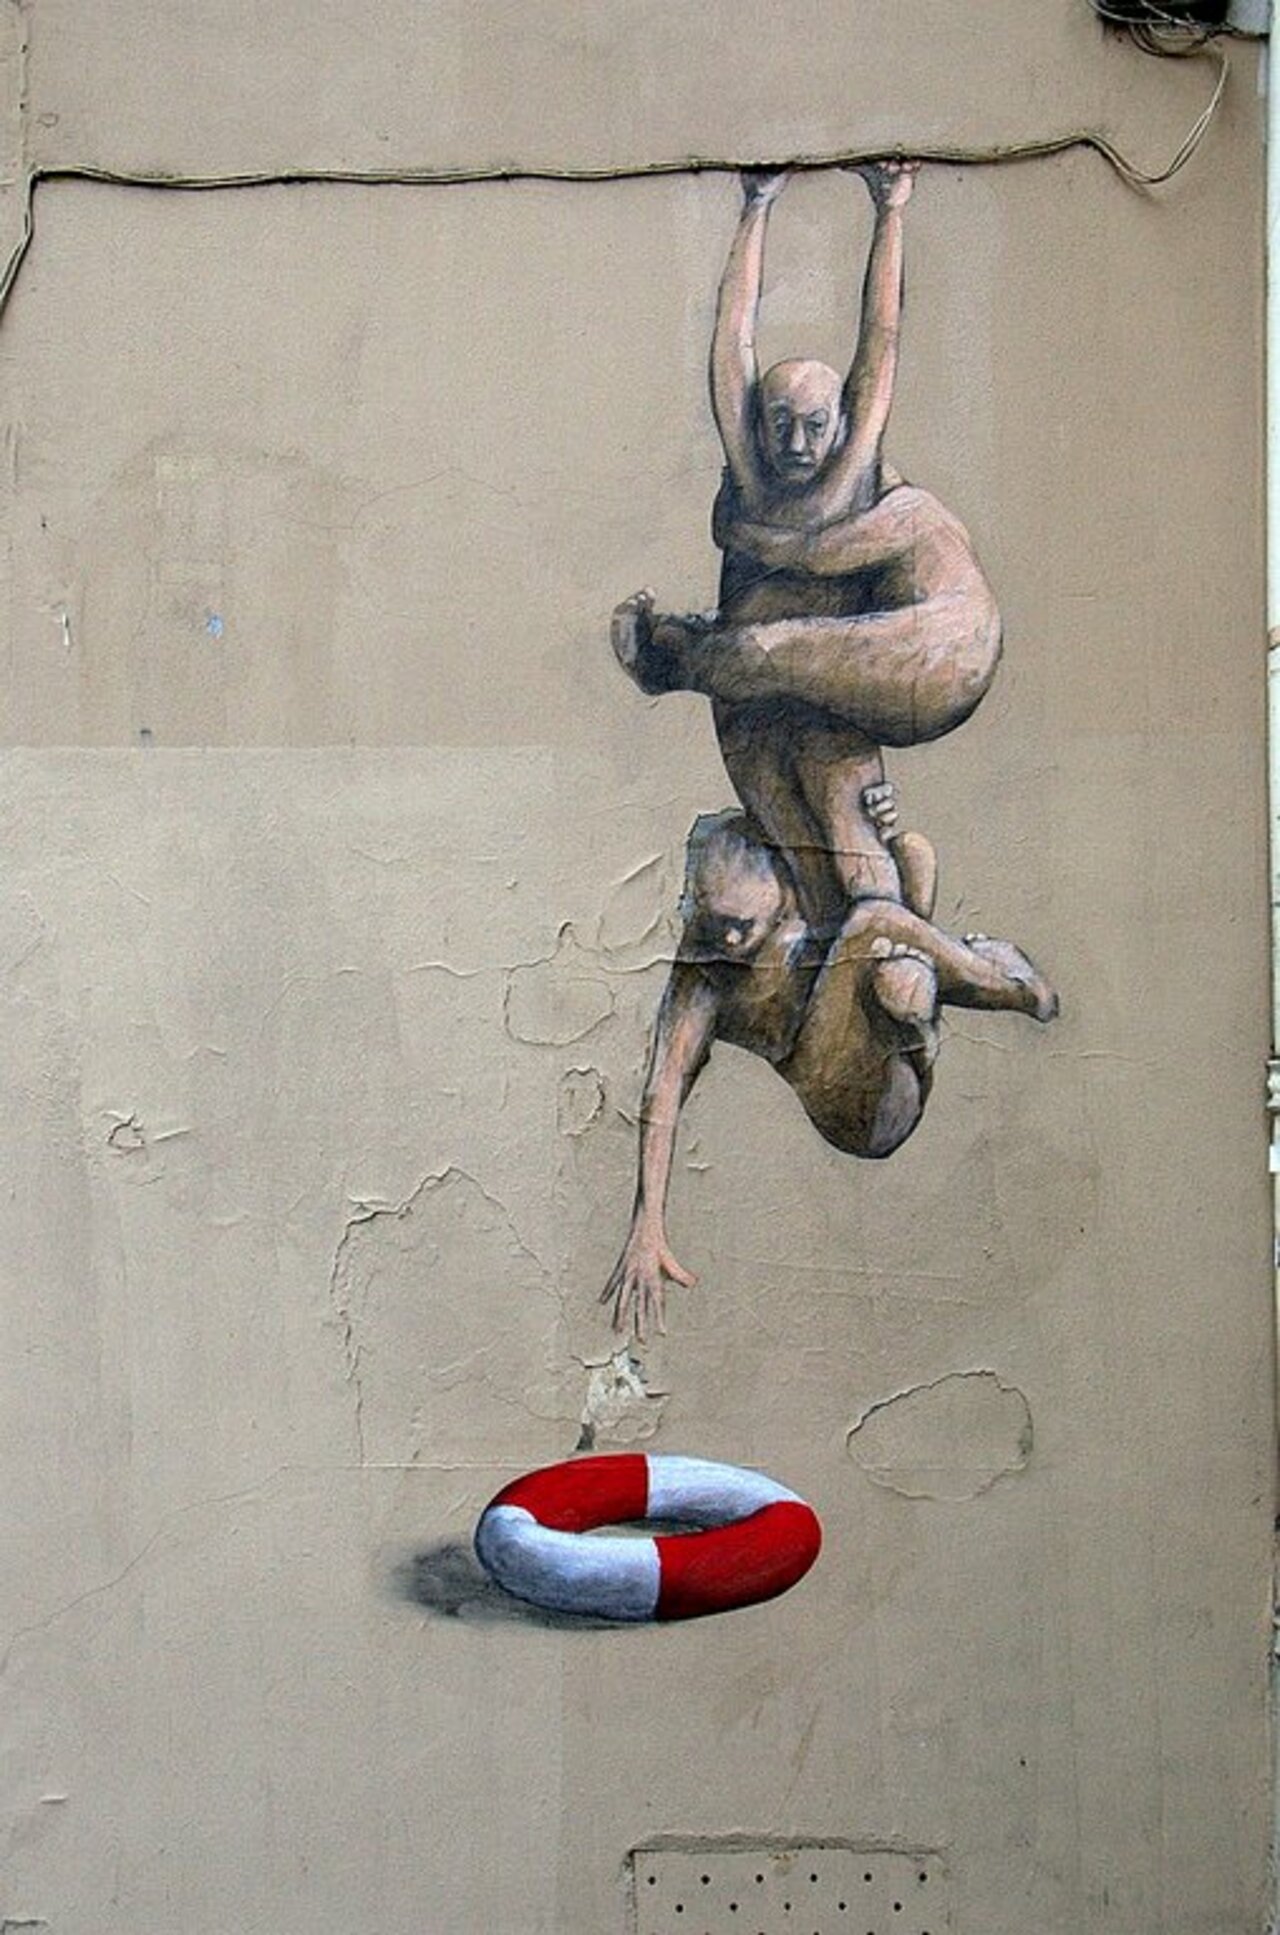 Street Art by philippe herad in #Paris http://www.urbacolors.com #art #mural #graffiti #streetart https://t.co/vUmehZDvHj